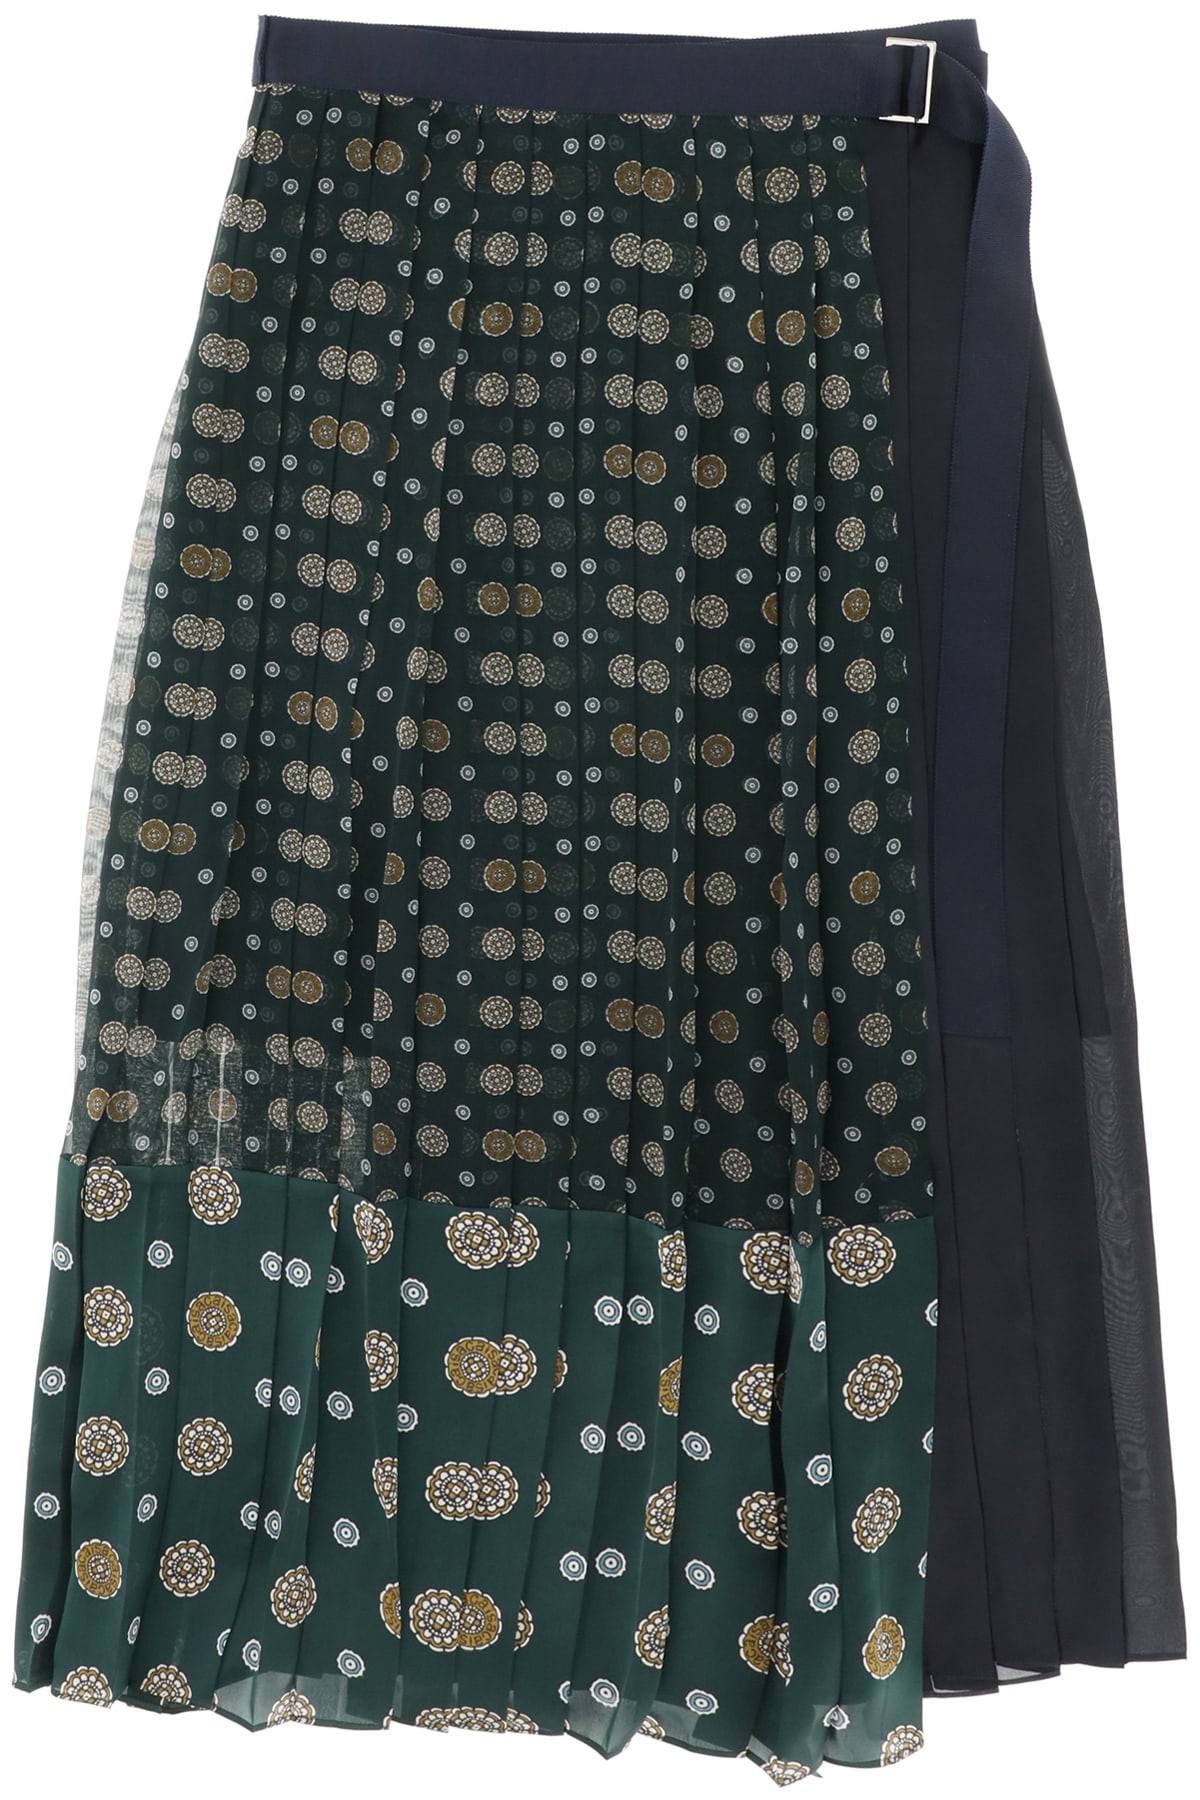 Sacai Printed Pleated Skirt